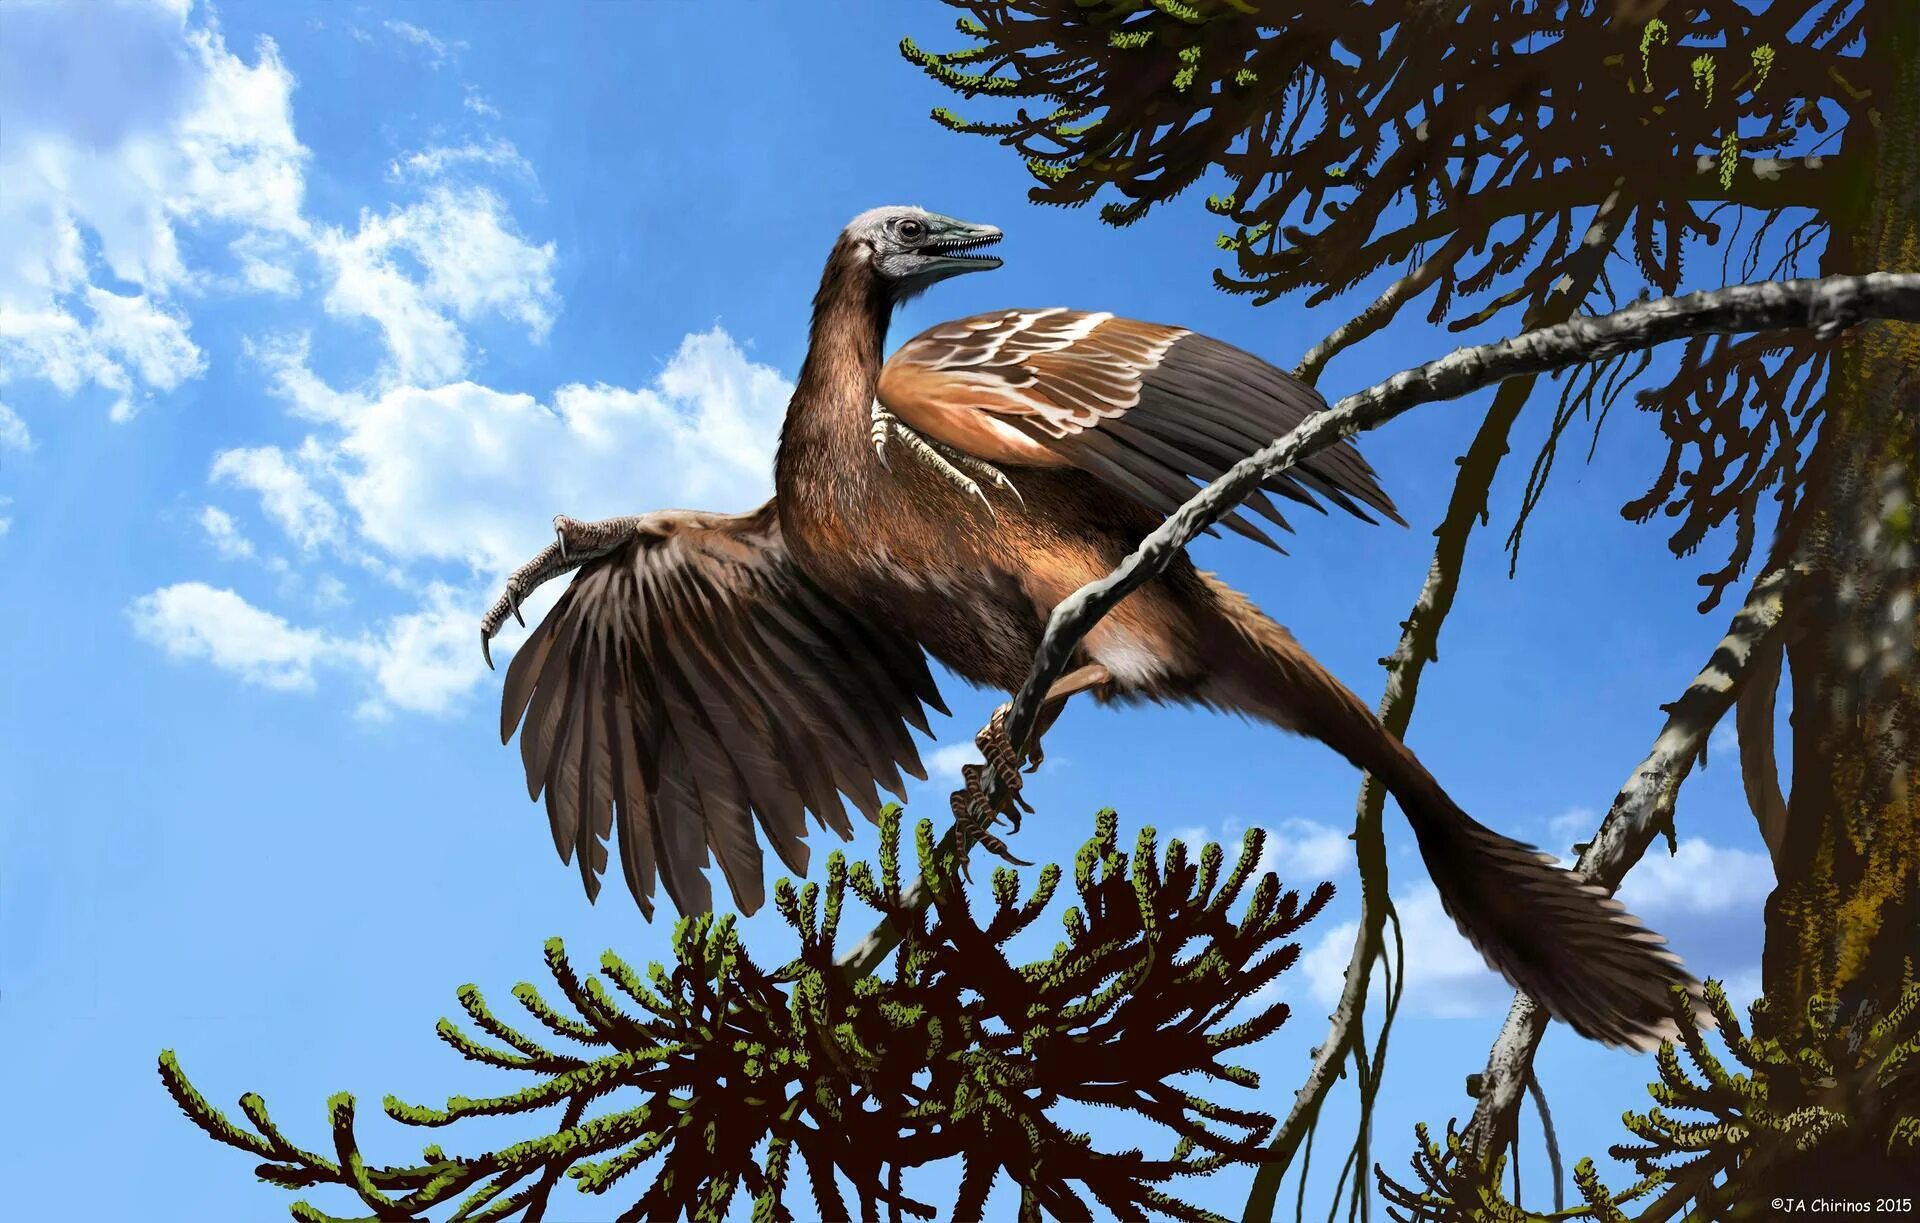 Птица Археоптерикс. Юрский Археоптерикс. Древние птицы Археоптерикс. Археоптерикс динозавр.